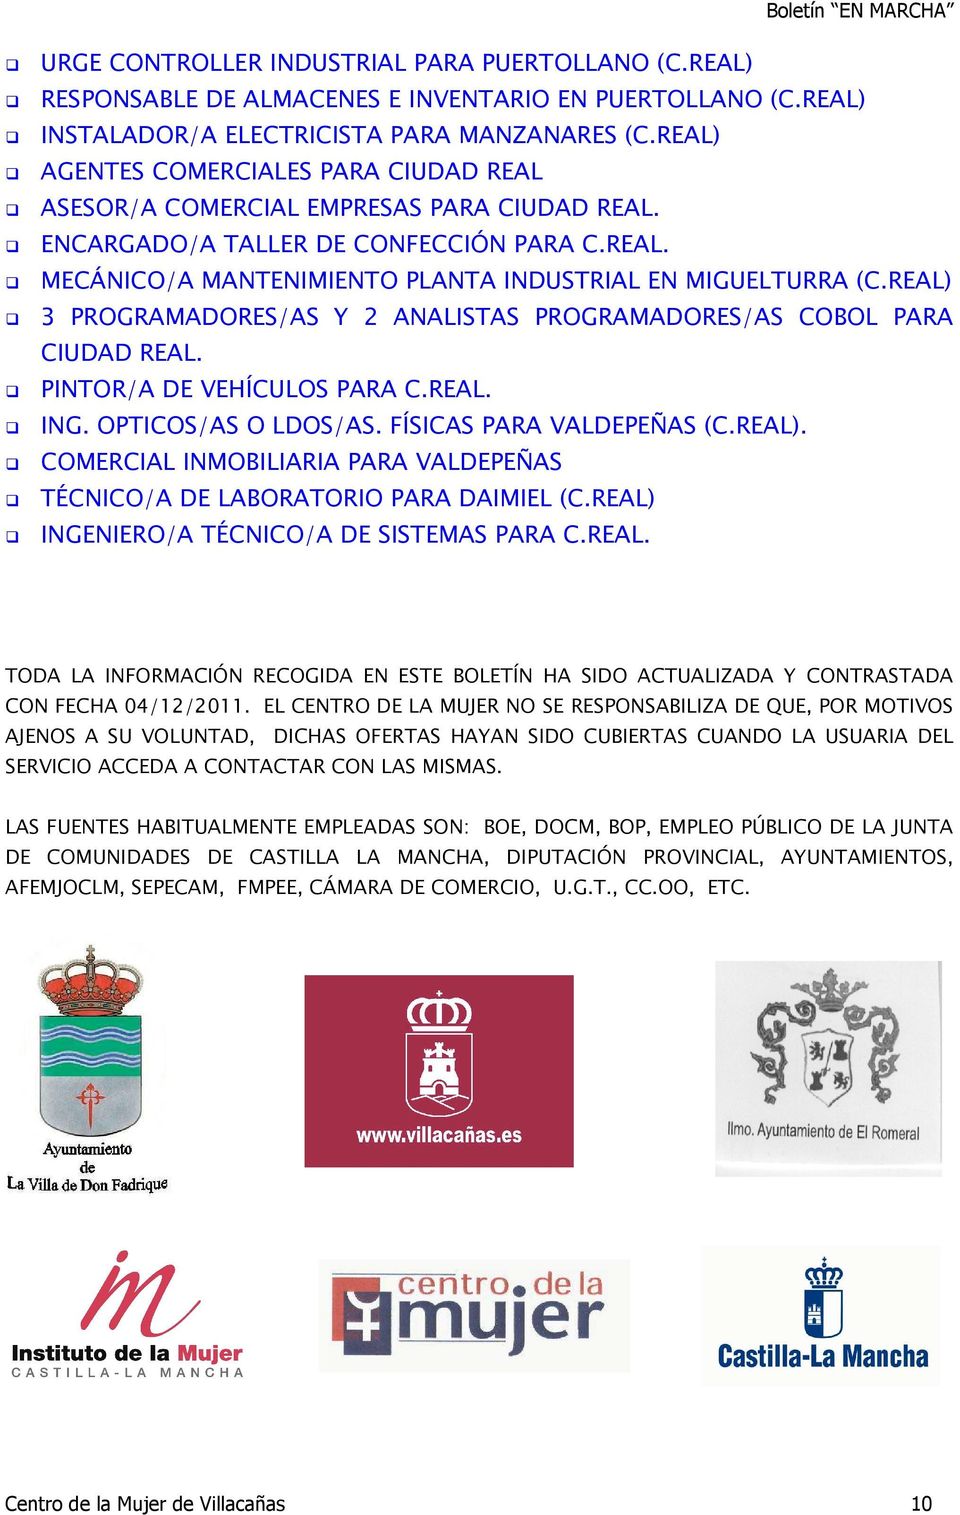 REAL) 3 PROGRAMADORES/AS Y 2 ANALISTAS PROGRAMADORES/AS COBOL PARA CIUDAD REAL. PINTOR/A DE VEHÍCULOS PARA C.REAL. ING. OPTICOS/AS O LDOS/AS. FÍSICAS PARA VALDEPEÑAS (C.REAL). COMERCIAL INMOBILIARIA PARA VALDEPEÑAS TÉCNICO/A DE LABORATORIO PARA DAIMIEL (C.